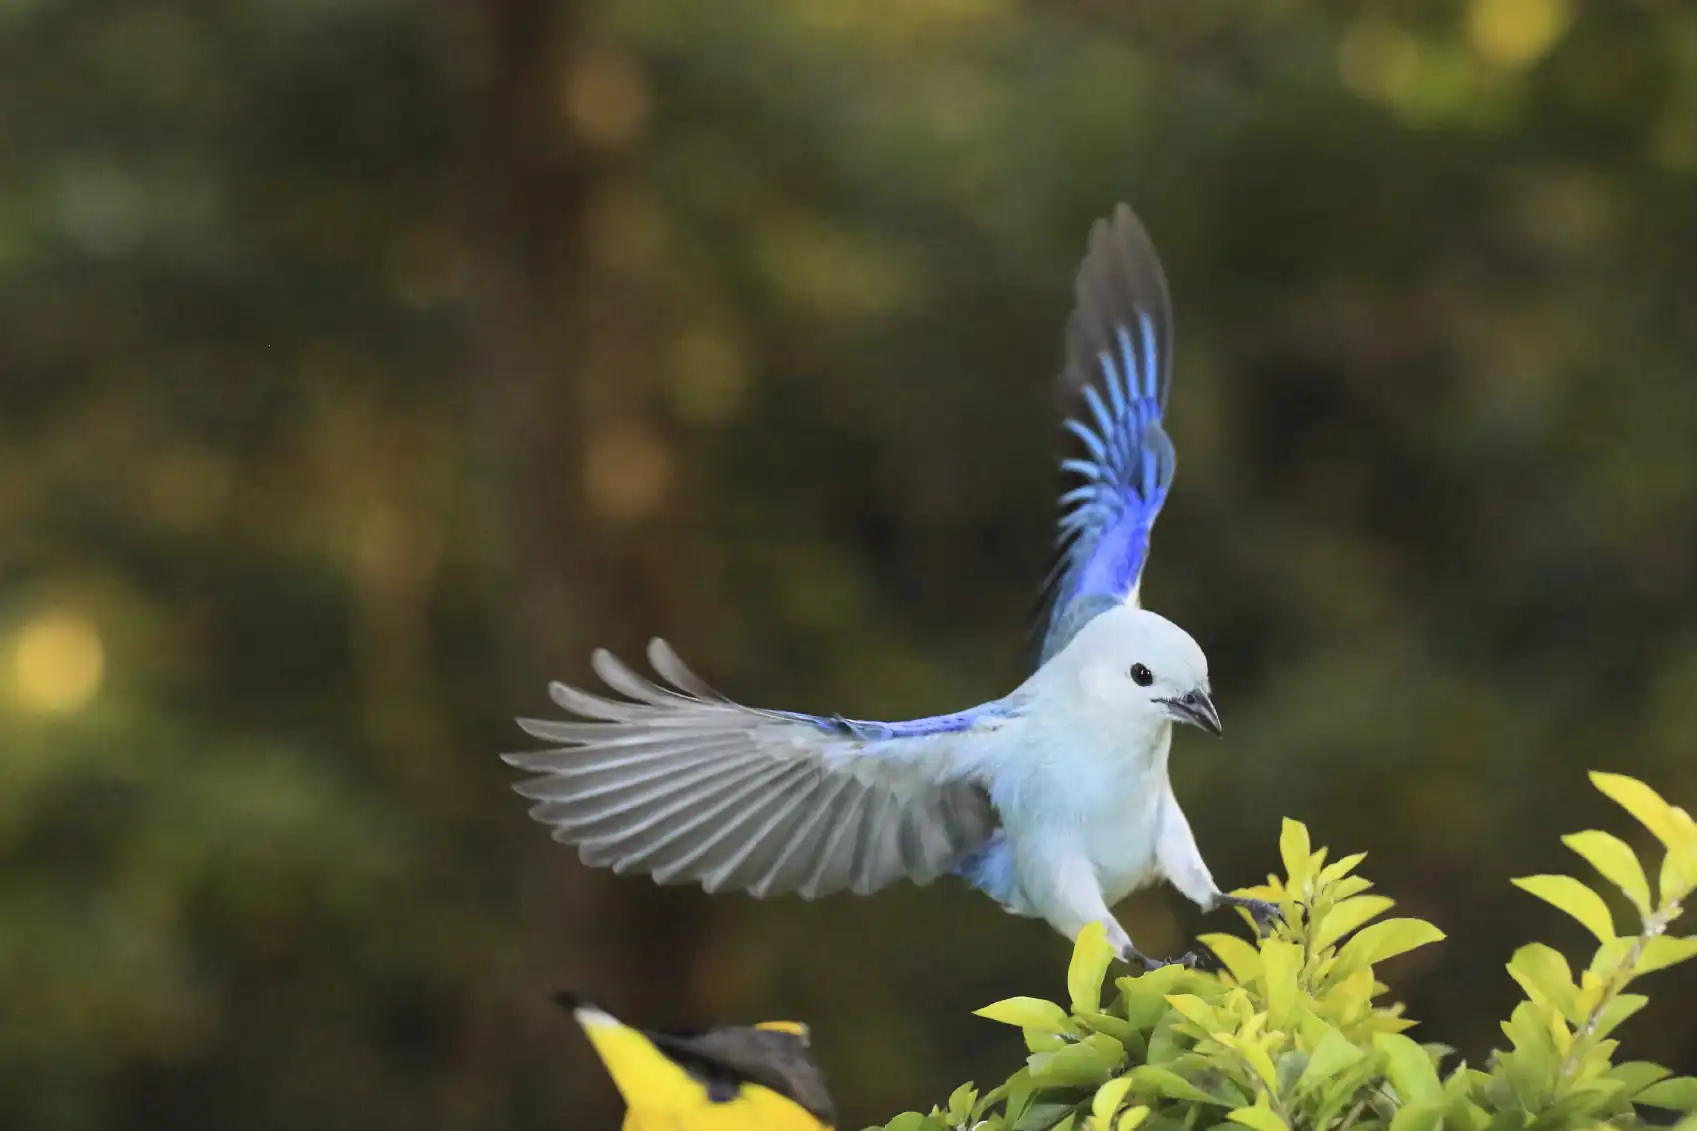 Advanced Bird Photography: Birds in Flight (Part 2)